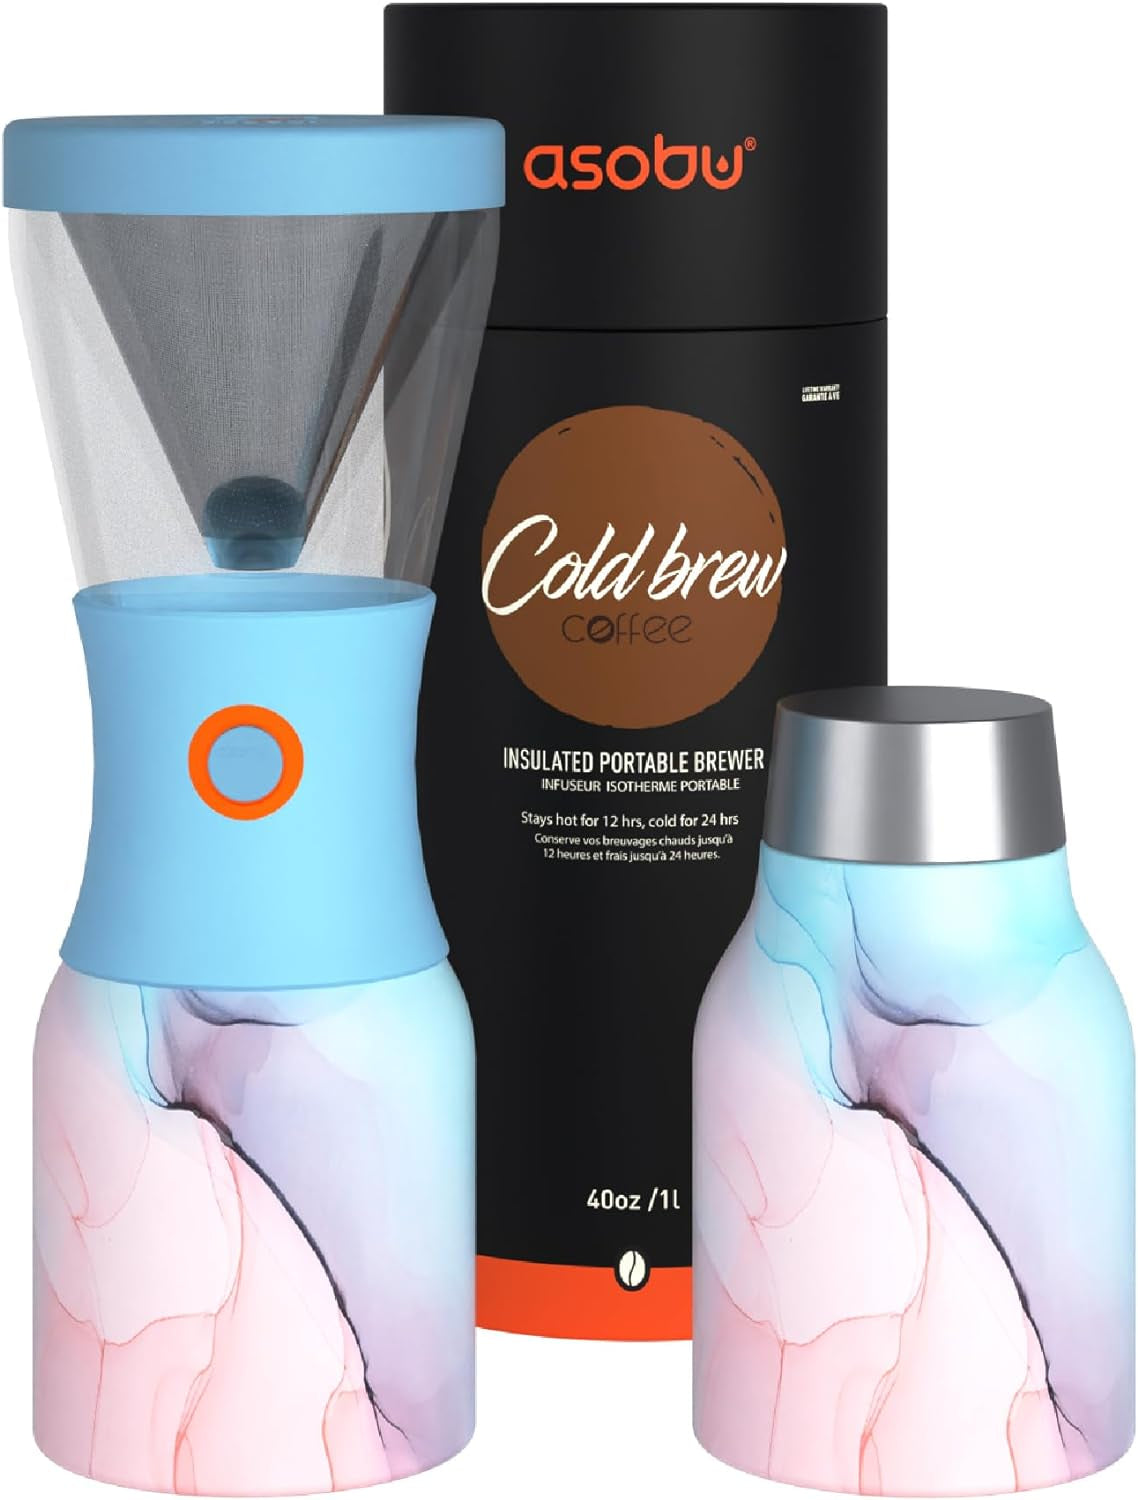 Asobu Coldbrew Insulated Portable Brewer - Revolutionary Cold Brew Coffee Maker